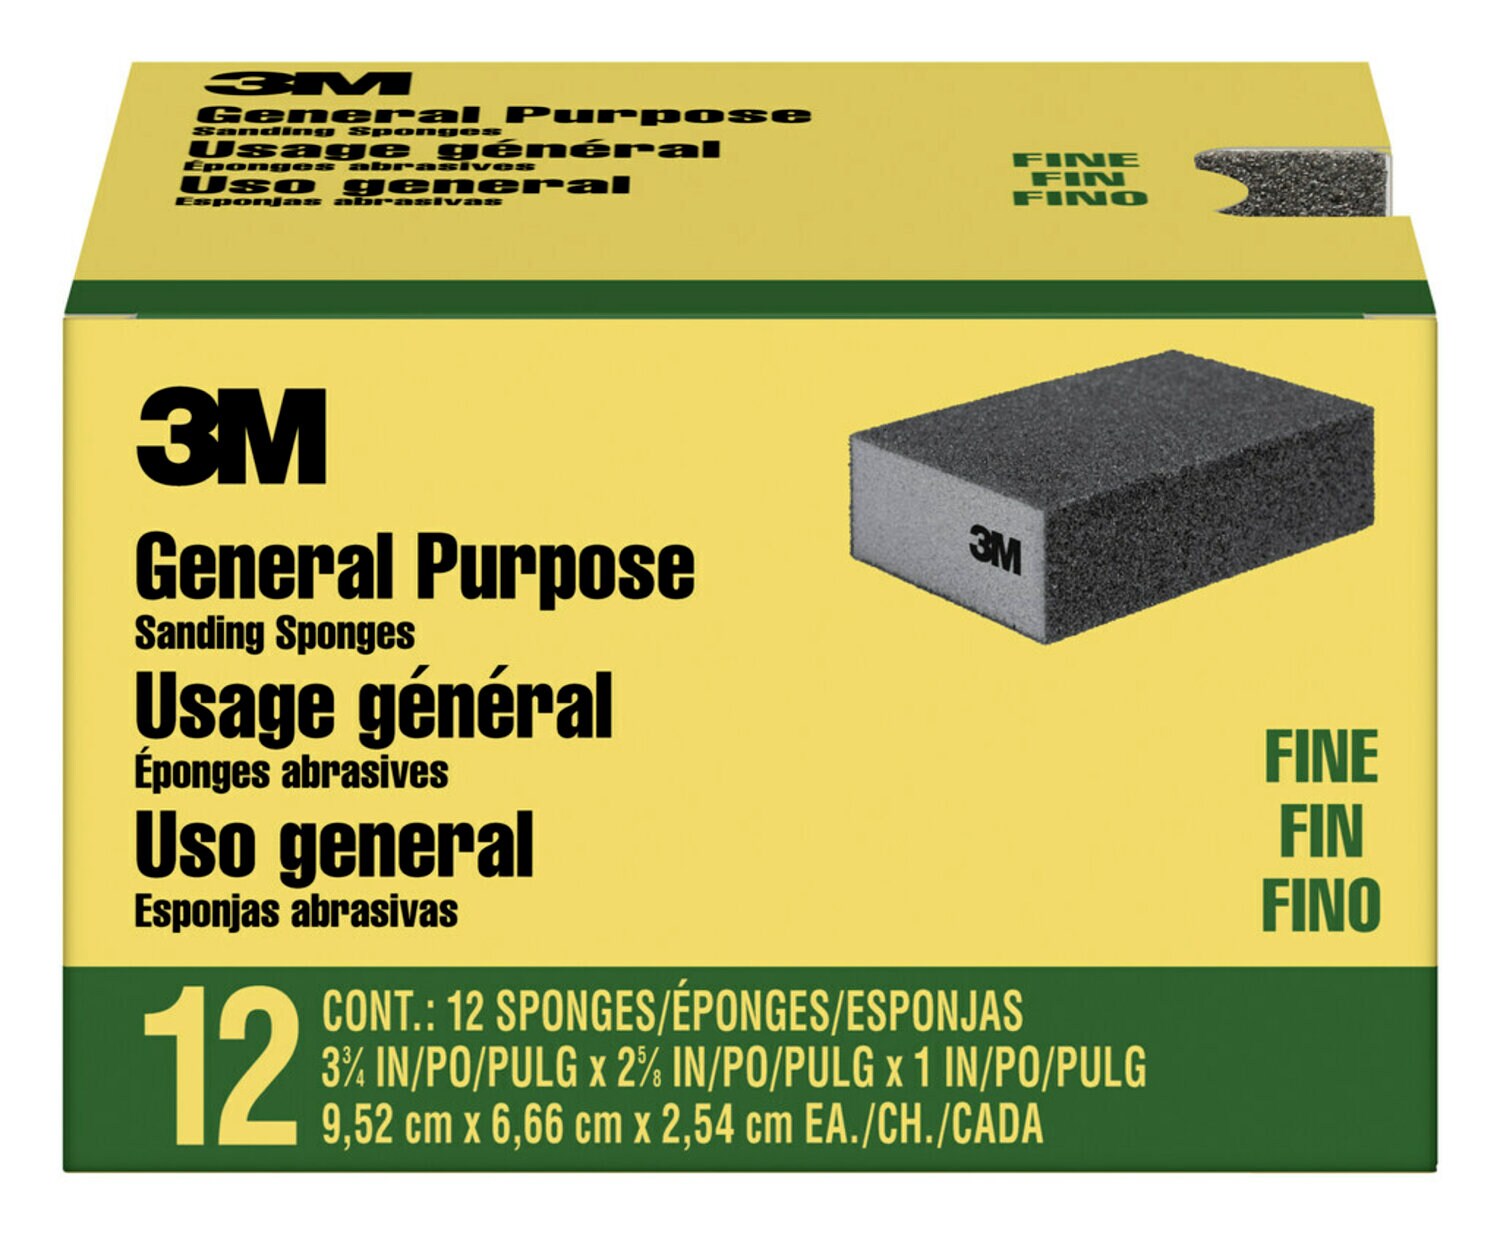 7100173307 - 3M General Purpose Sanding Sponge CP001-12P, Block, 3 3/4 in x 2 5/8 in x 1 in, Fine, 12/pk, 4 pks/cs